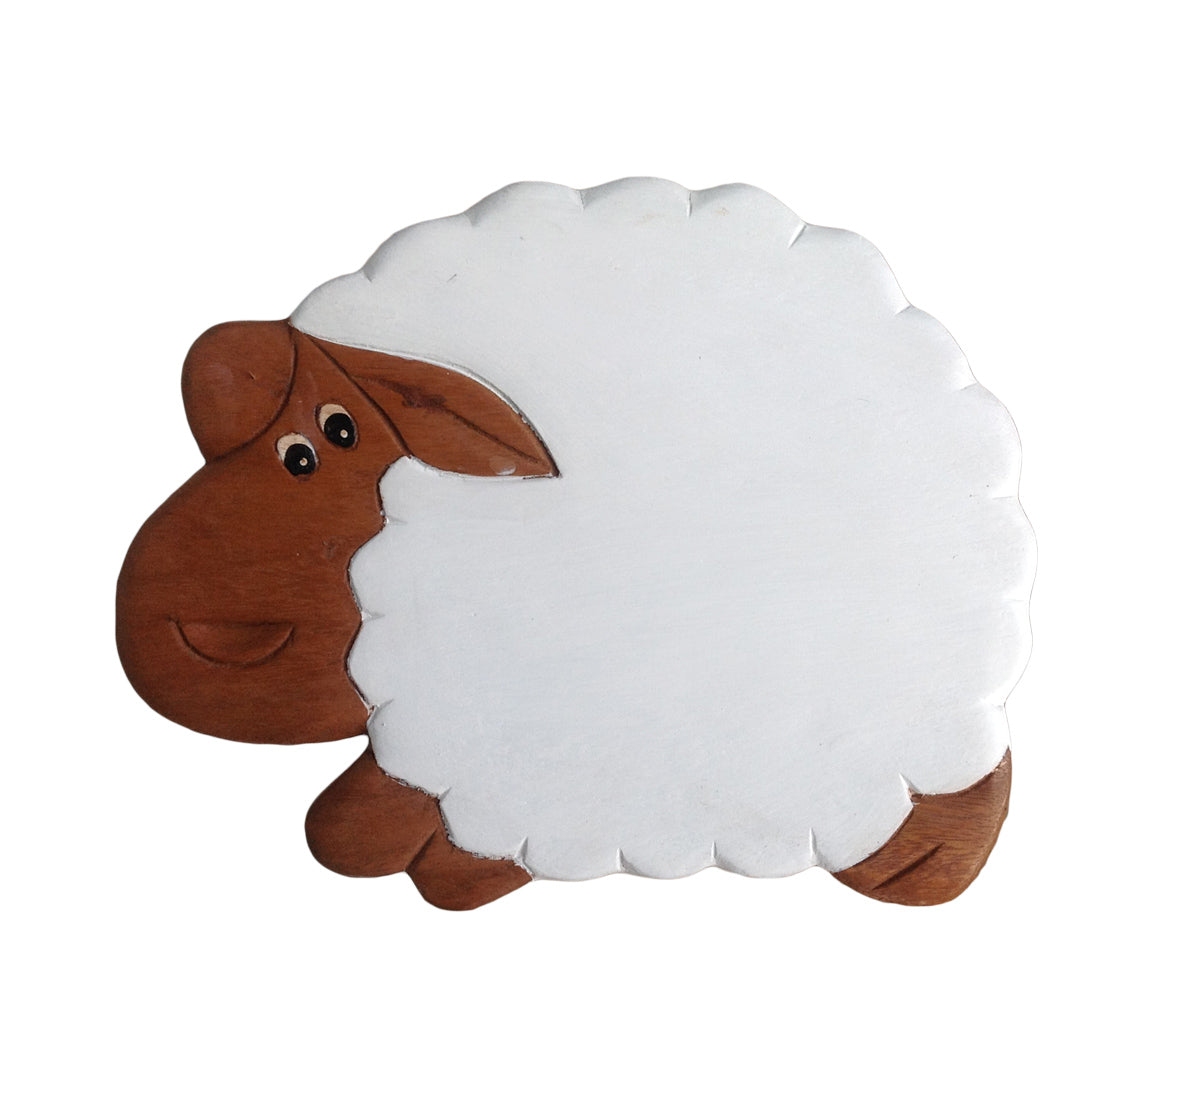 Kids Wooden Step Stool - Cute Sheep